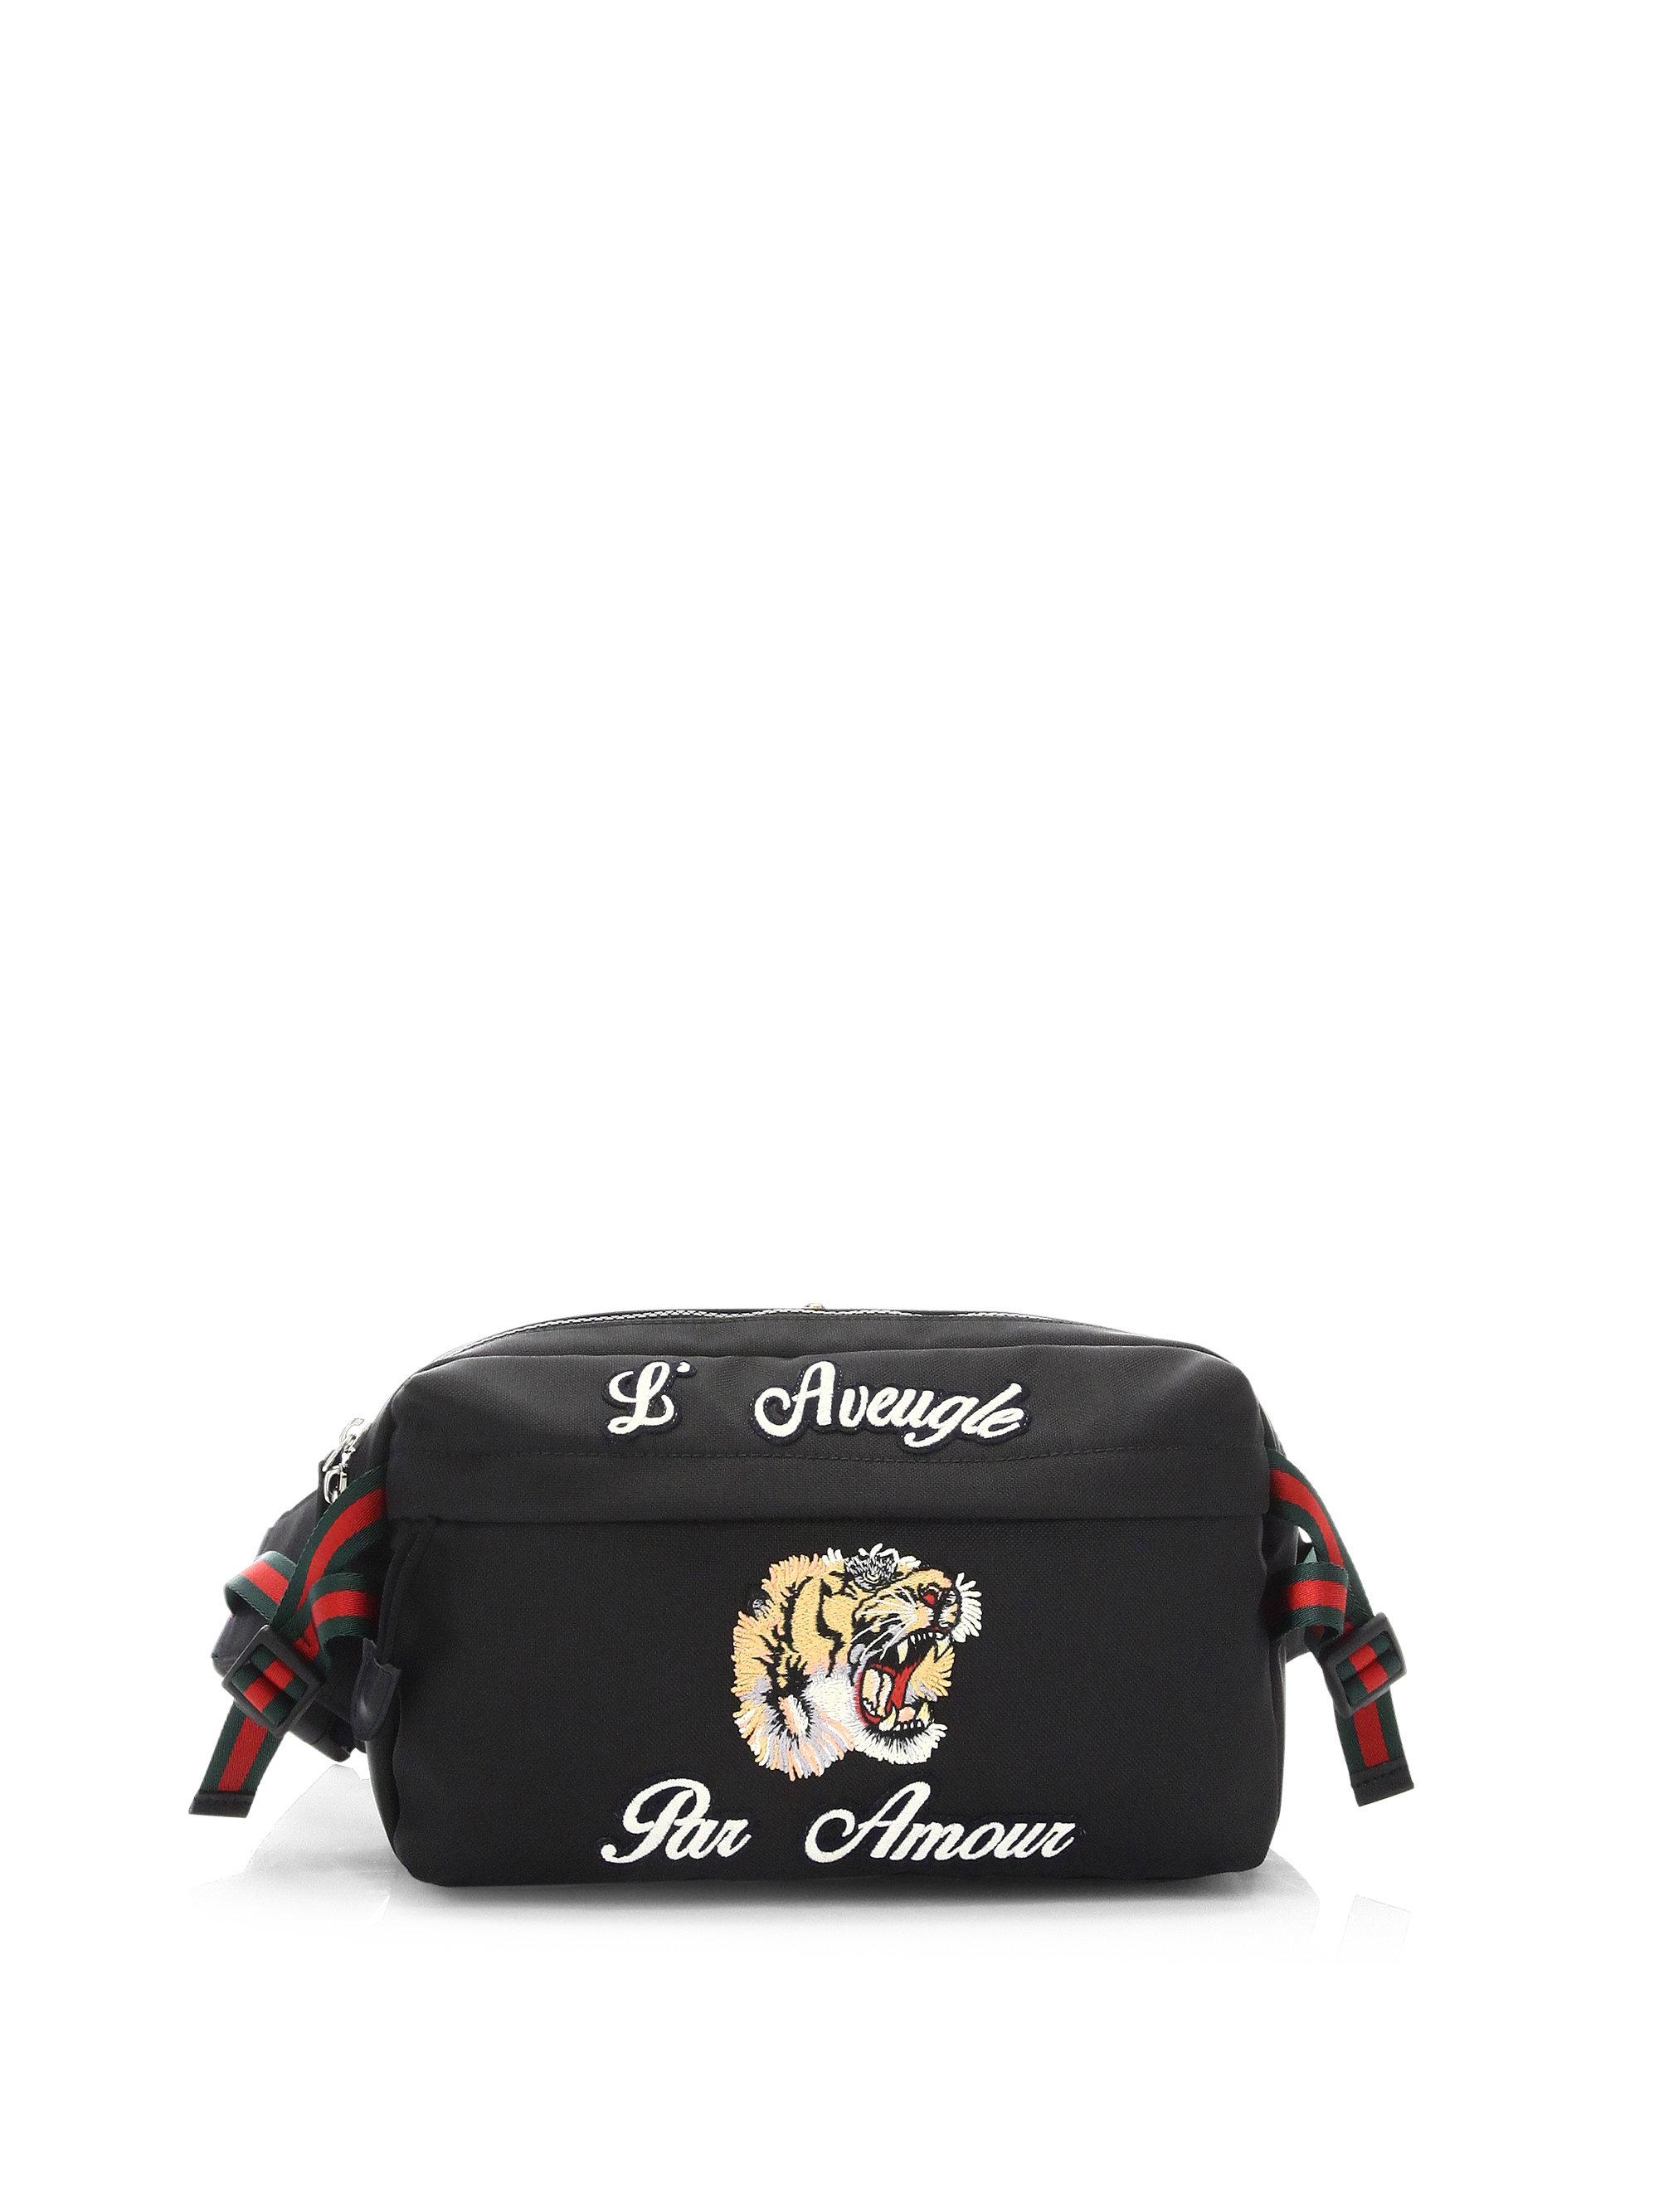 Gucci Techpack Canvas Belt Bag in Black - Lyst